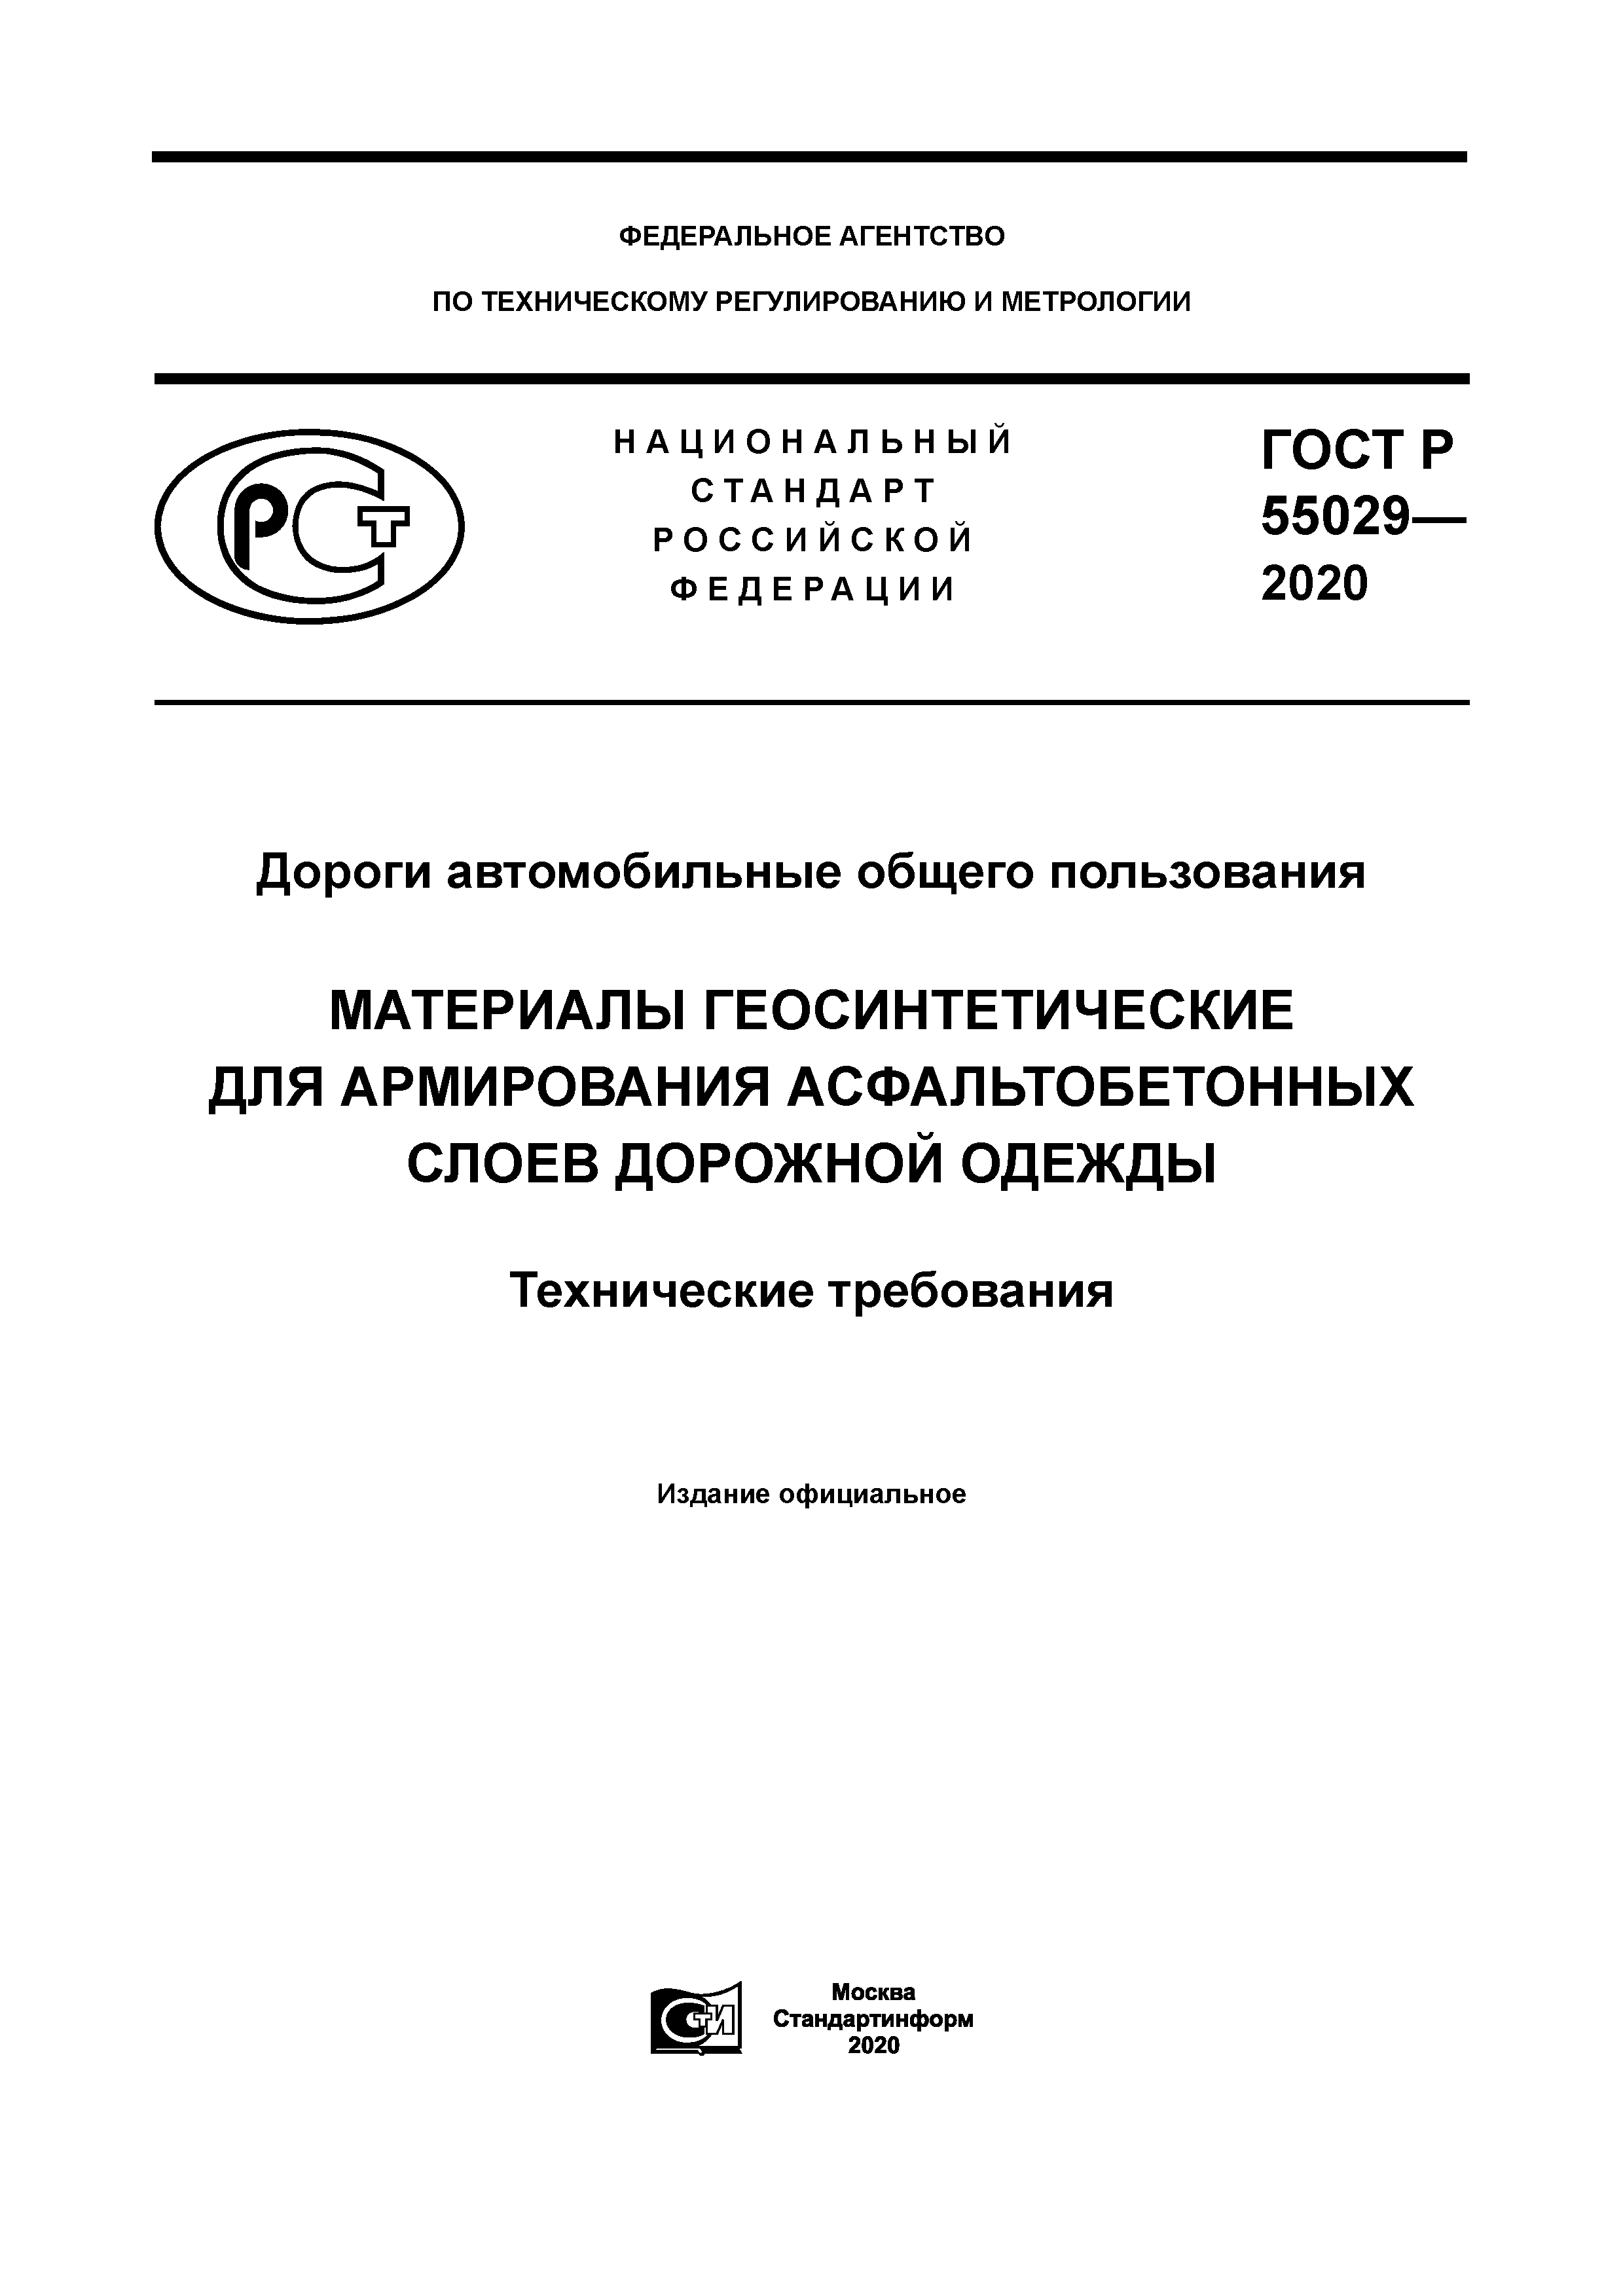 ГОСТ Р 55029-2020